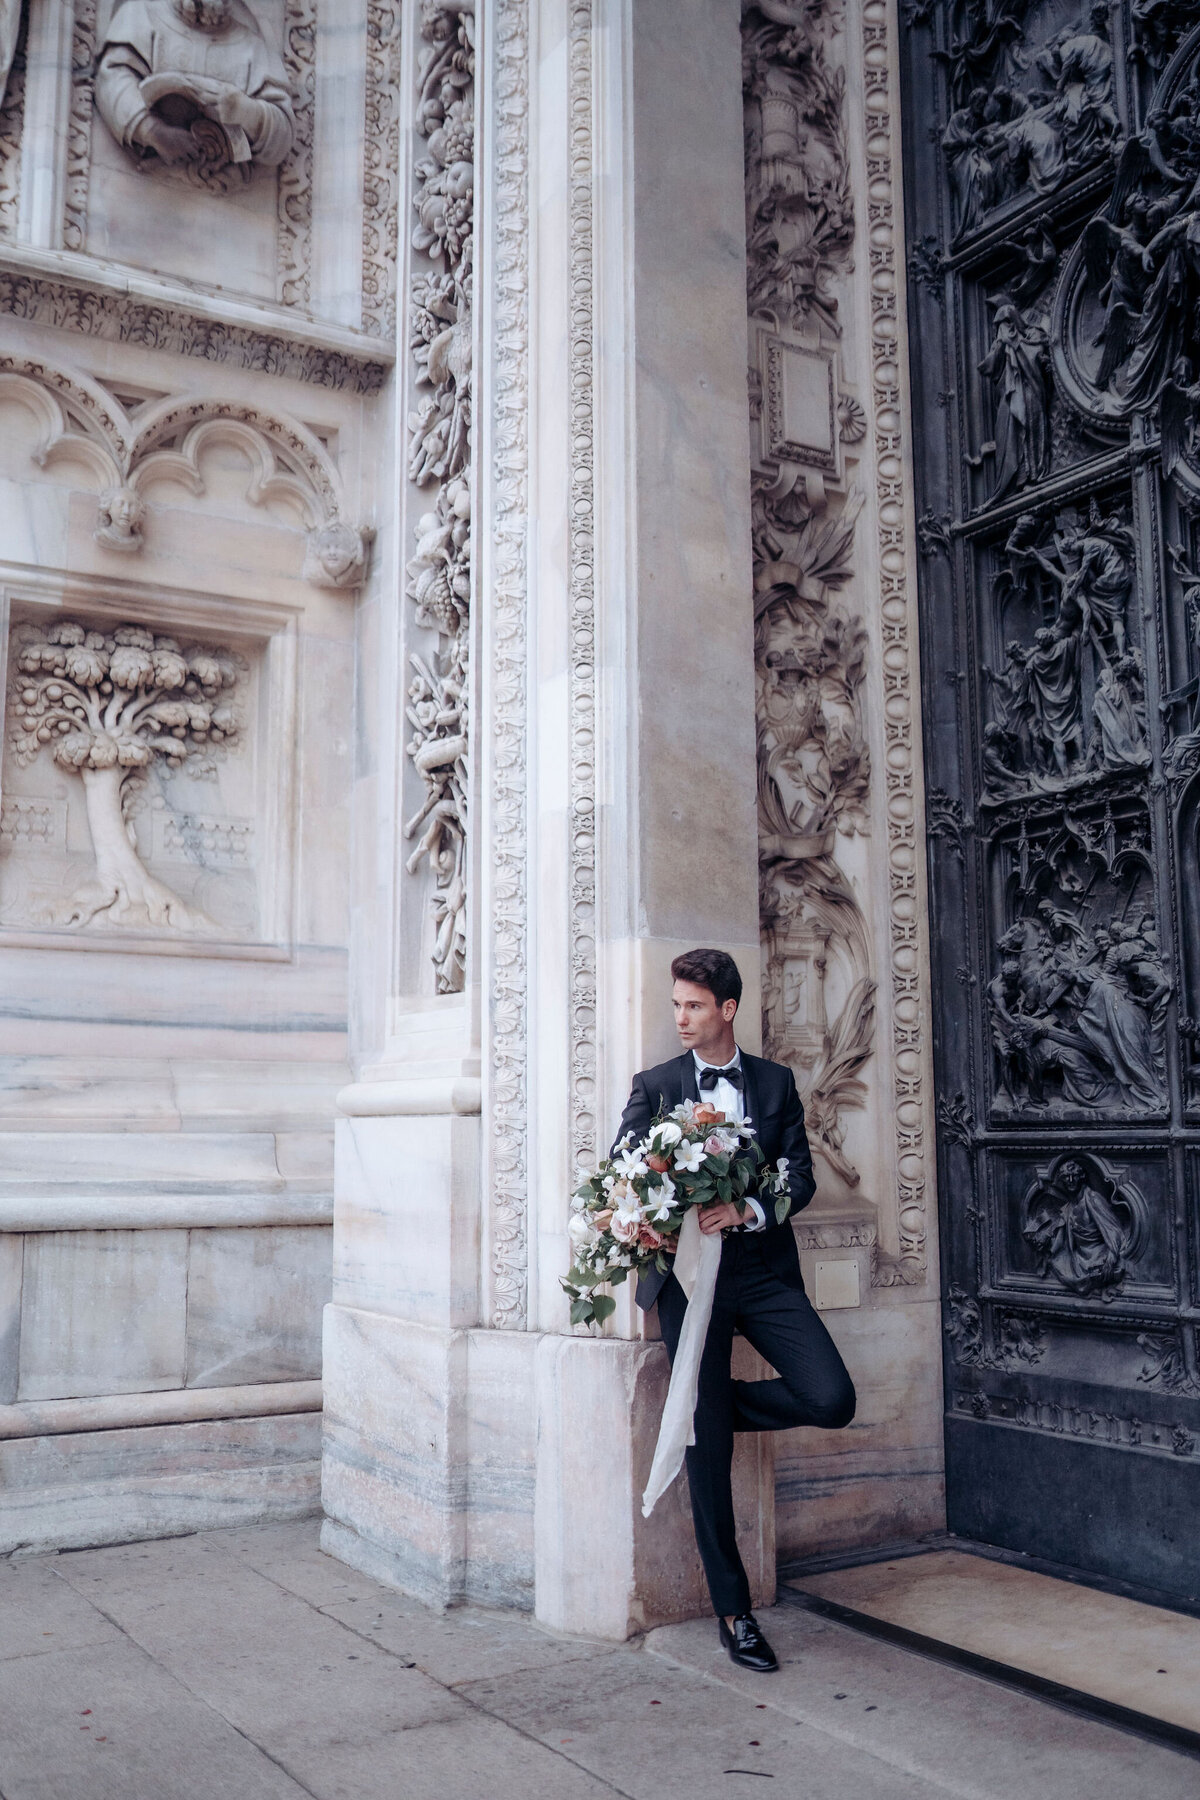 055-Milan-Duomo-Inspiration-Love-Story Elopement-Cinematic-Romance-Destination-Wedding-Editorial-Luxury-Fine-Art-Lisa-Vigliotta-Photography